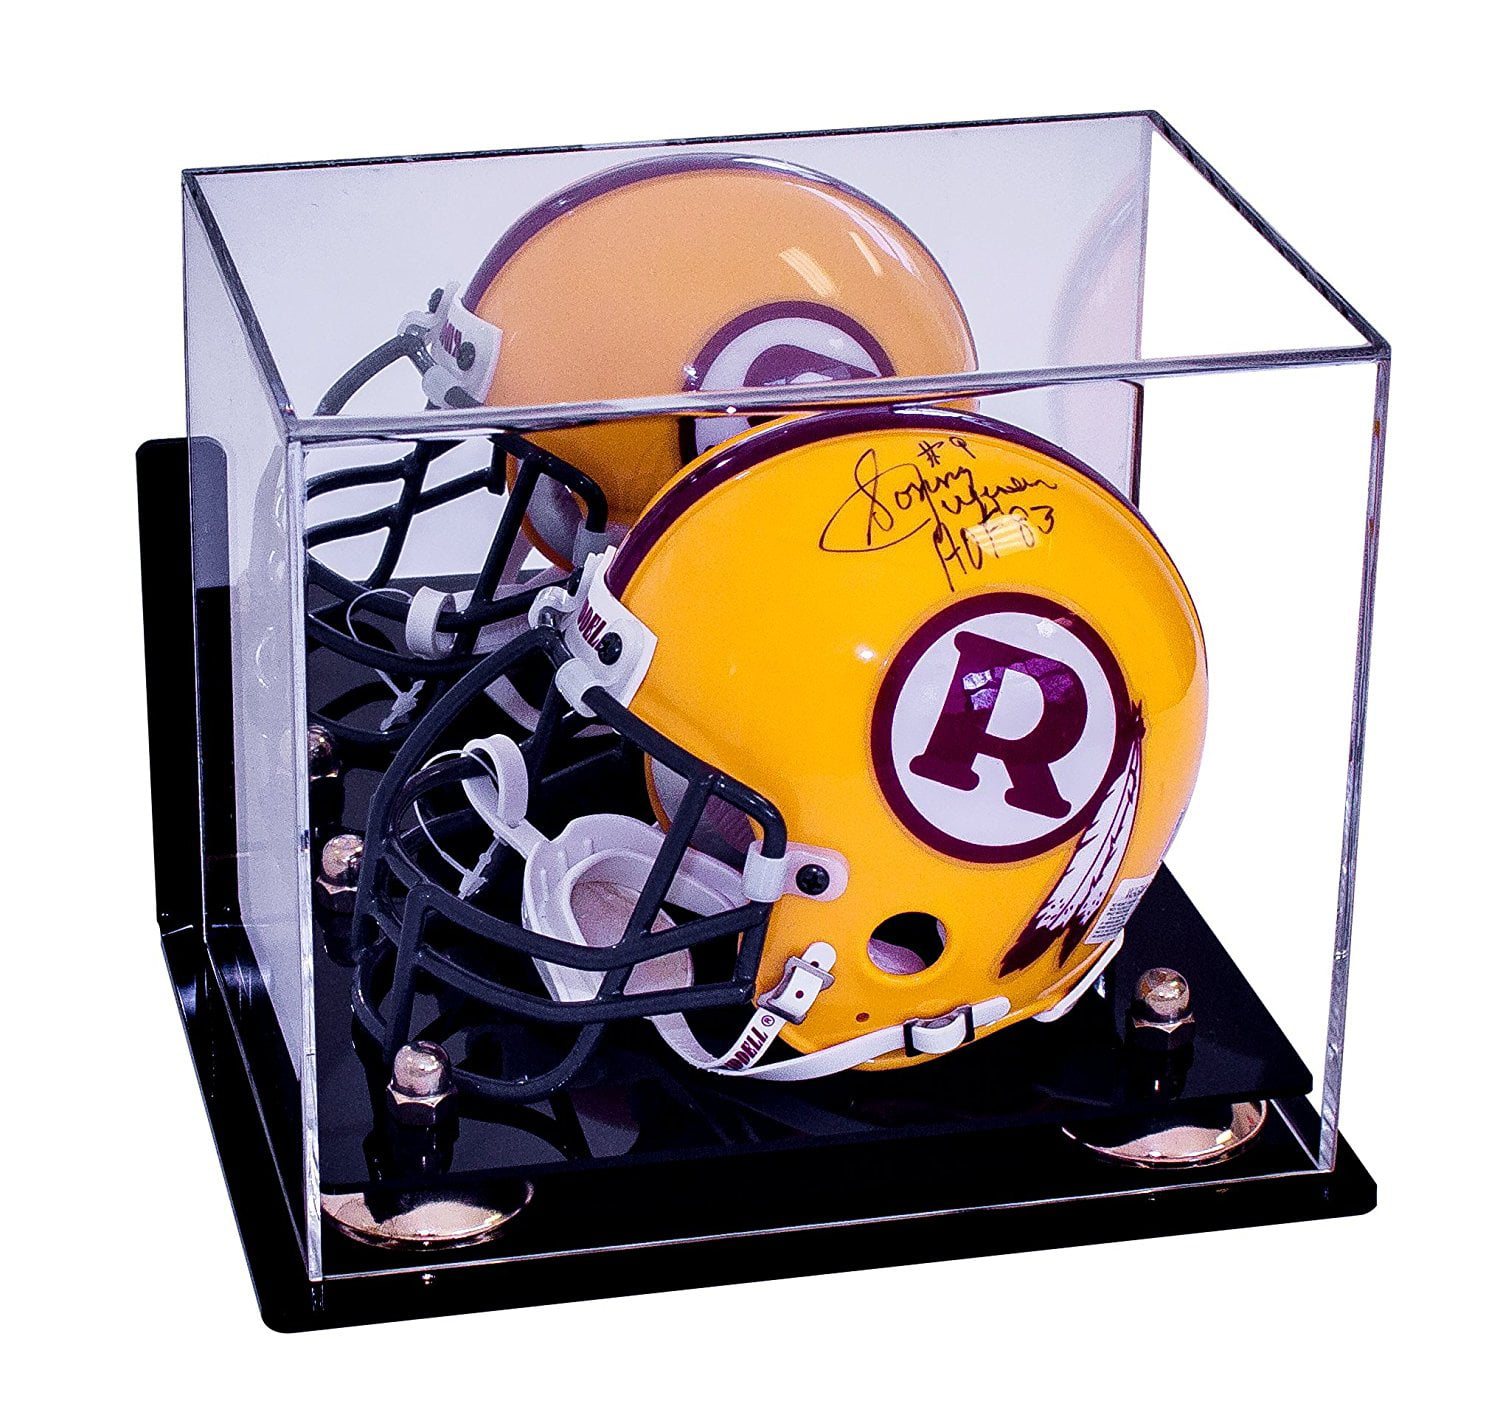 MINI-Miniature Football Helmet Clear Display Case with Silver Risers A003-SR 